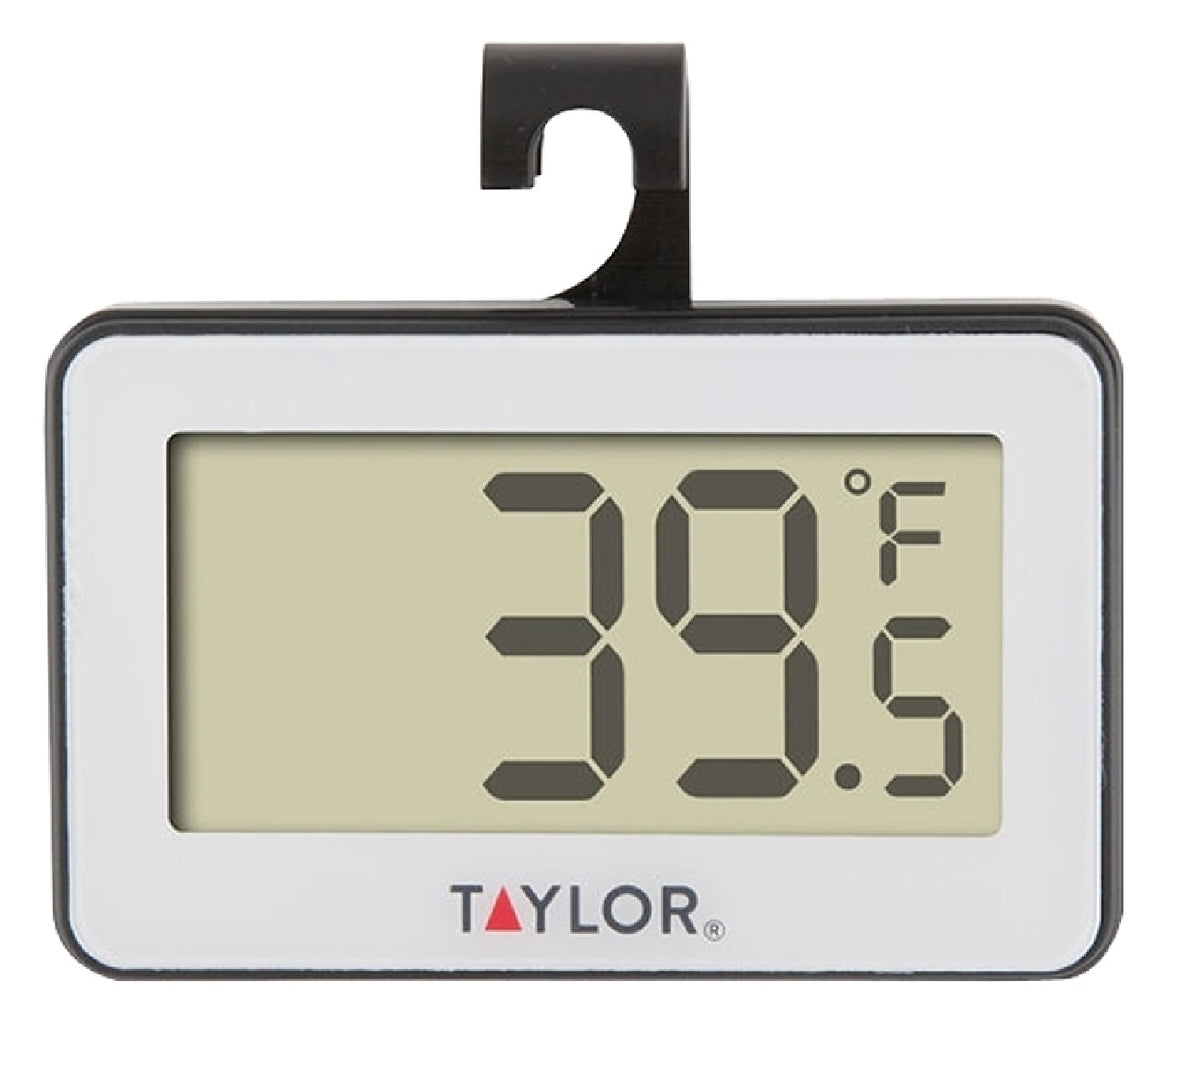 Taylor 1443 Digital Refrigerator/Freezer Thermometer, Black, Plastic